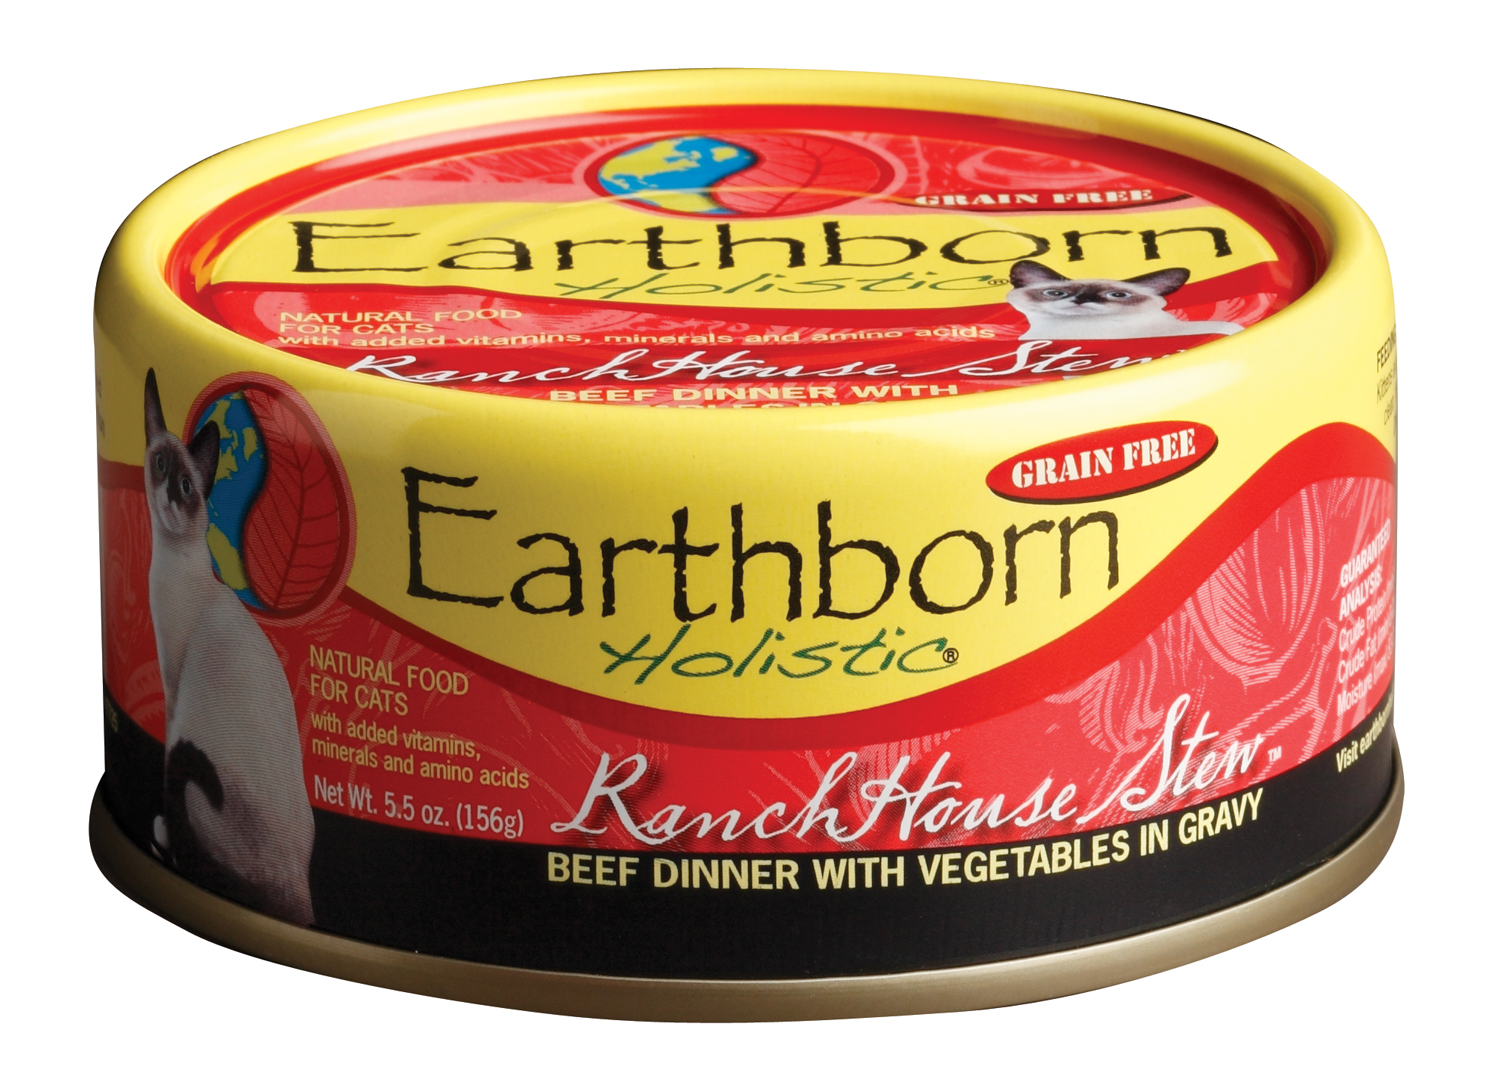 Earthborn Holistic RanchHouse Stew, 5.5 oz